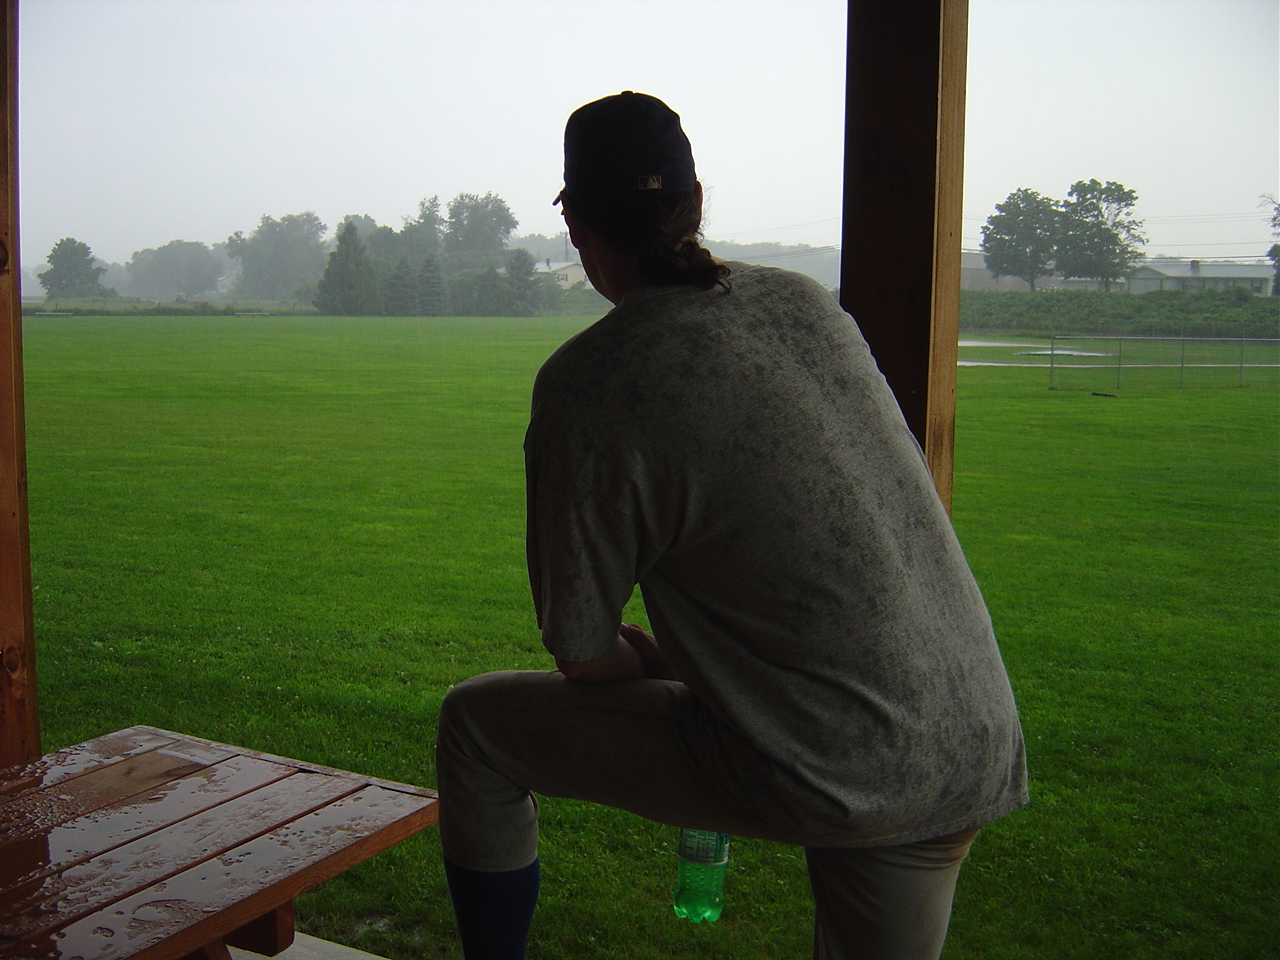 Duse ponders the rain